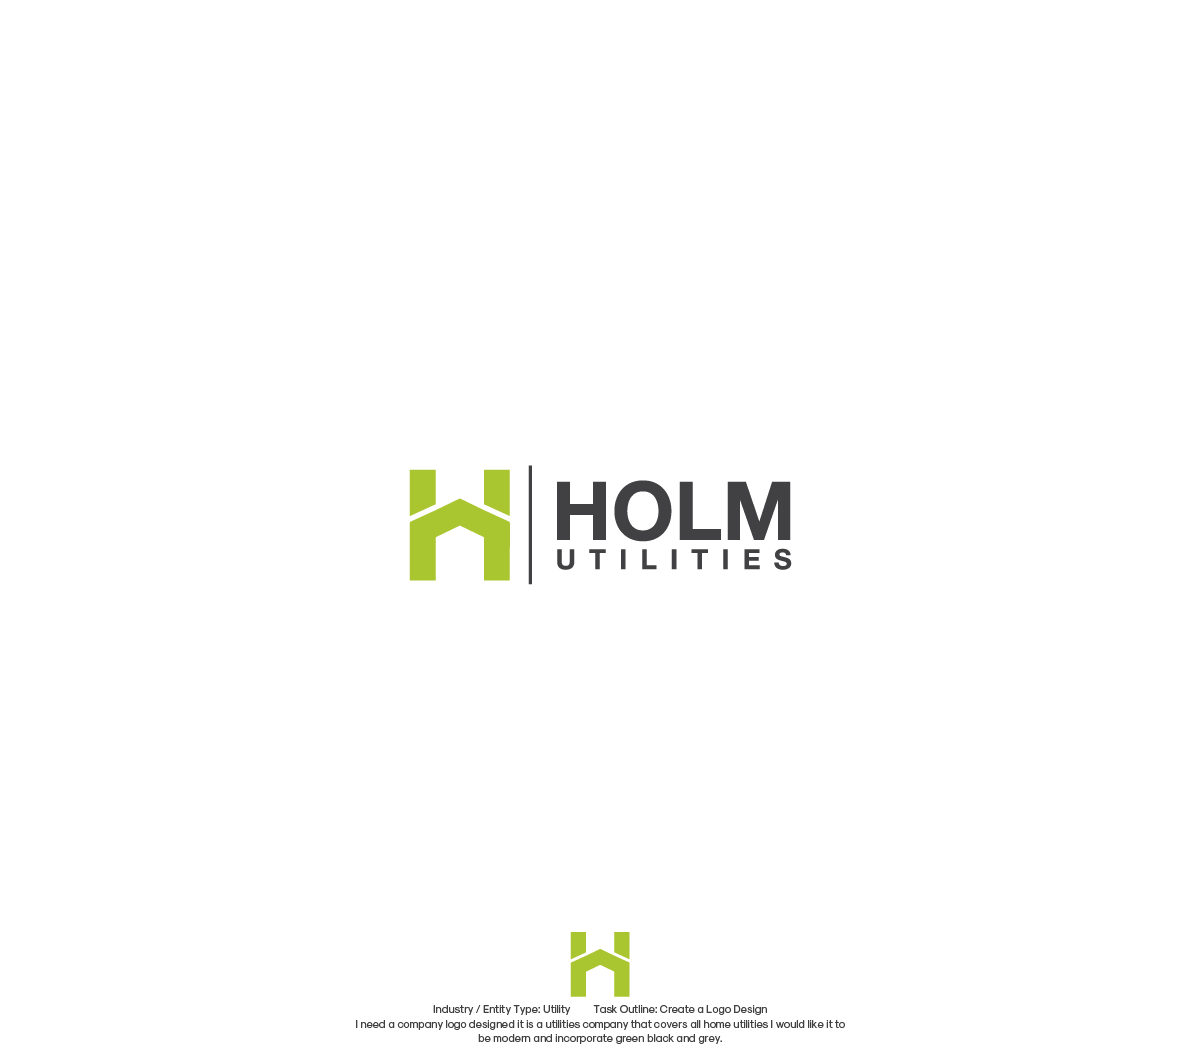 Utility Company Logo - Professional, Elegant, Utility Logo Design for Holm utilities